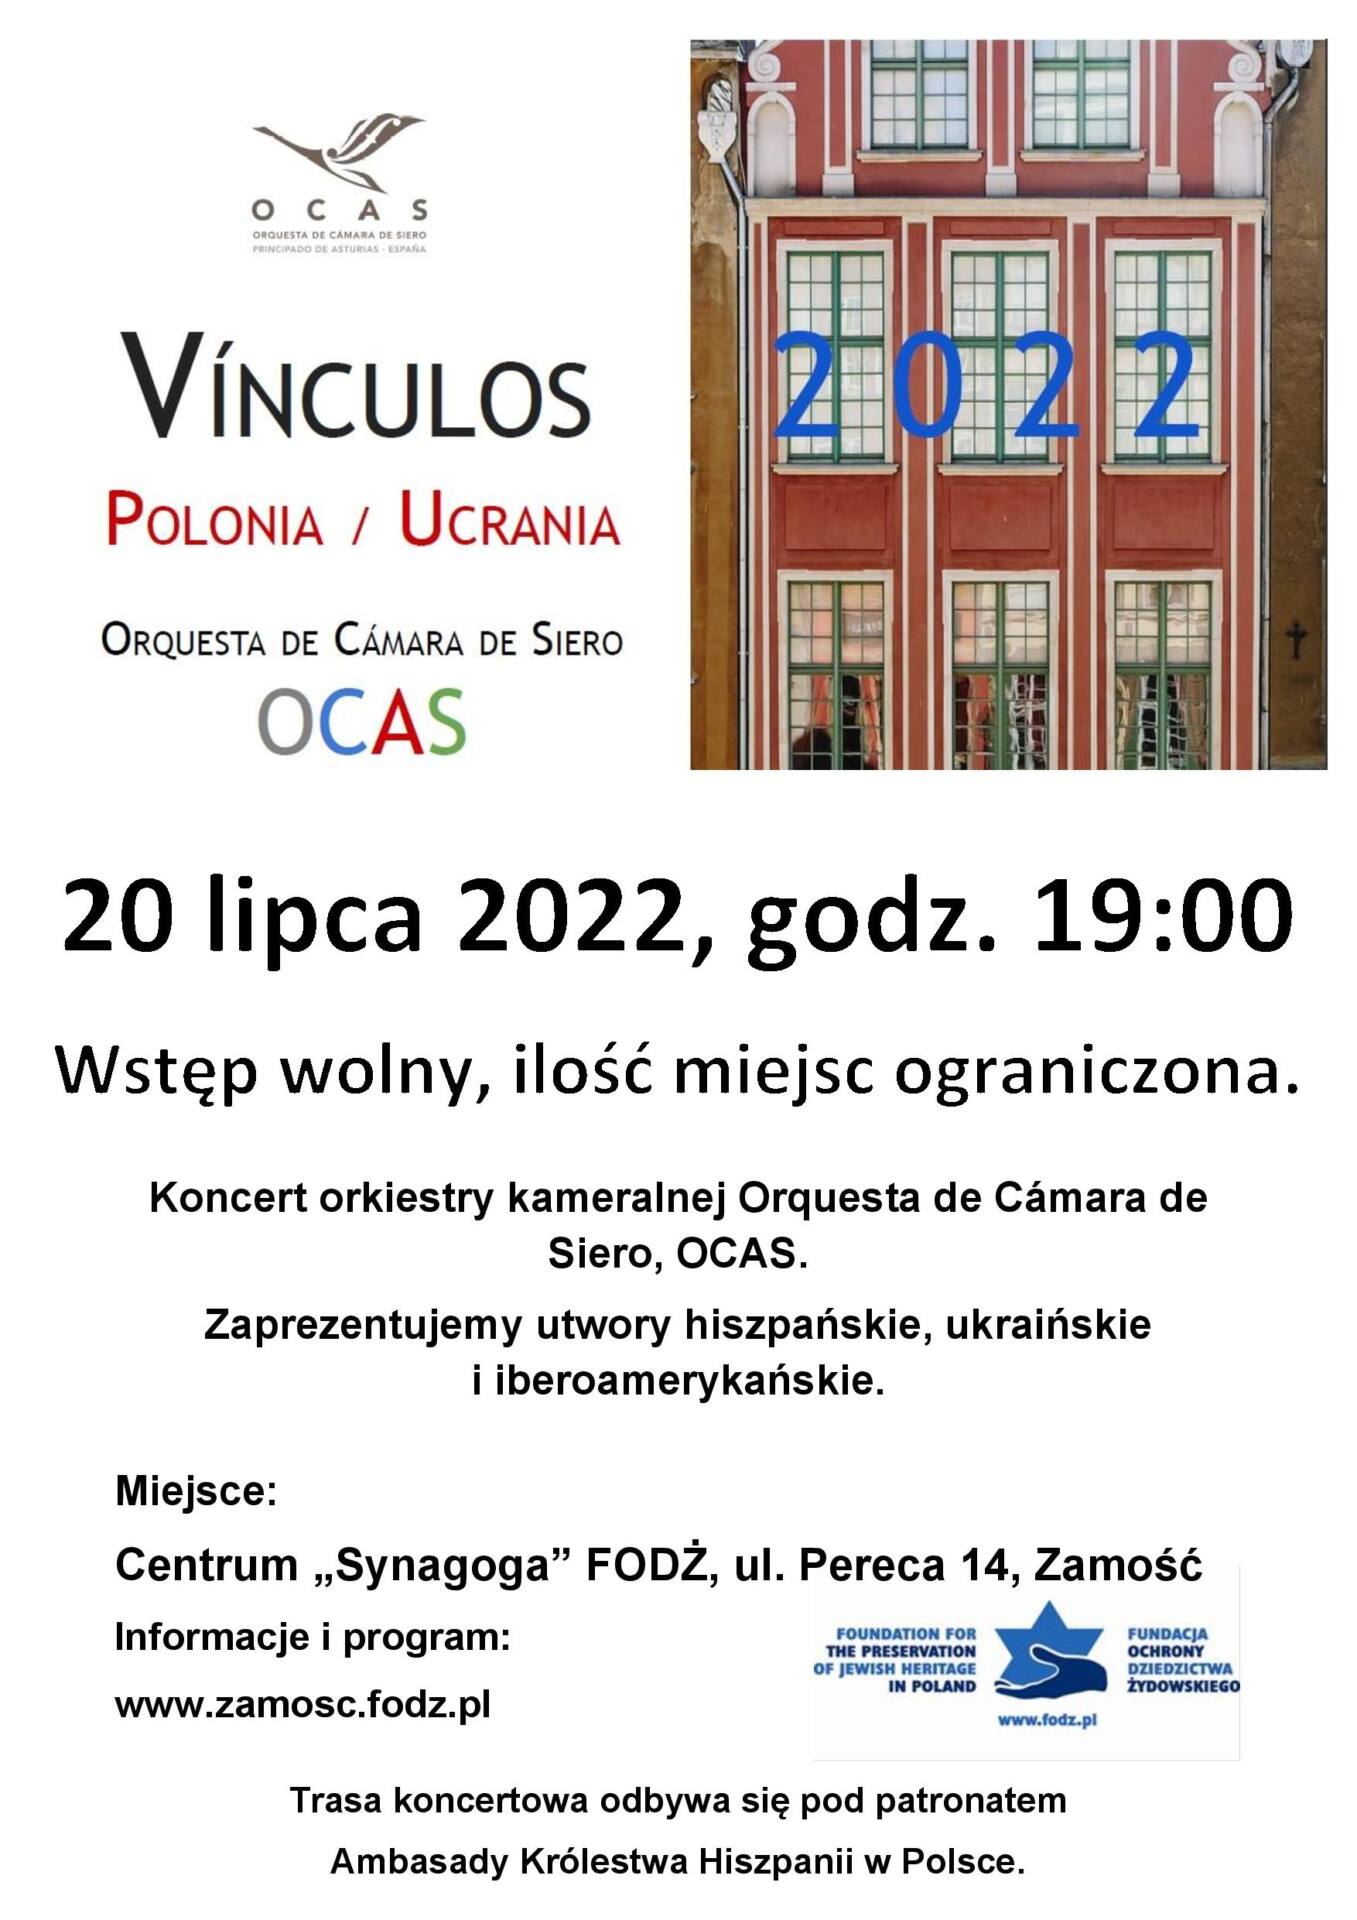 plakat 5 VÍNCULOS 2022 Polska/ Ukraina - koncert w Centrum 